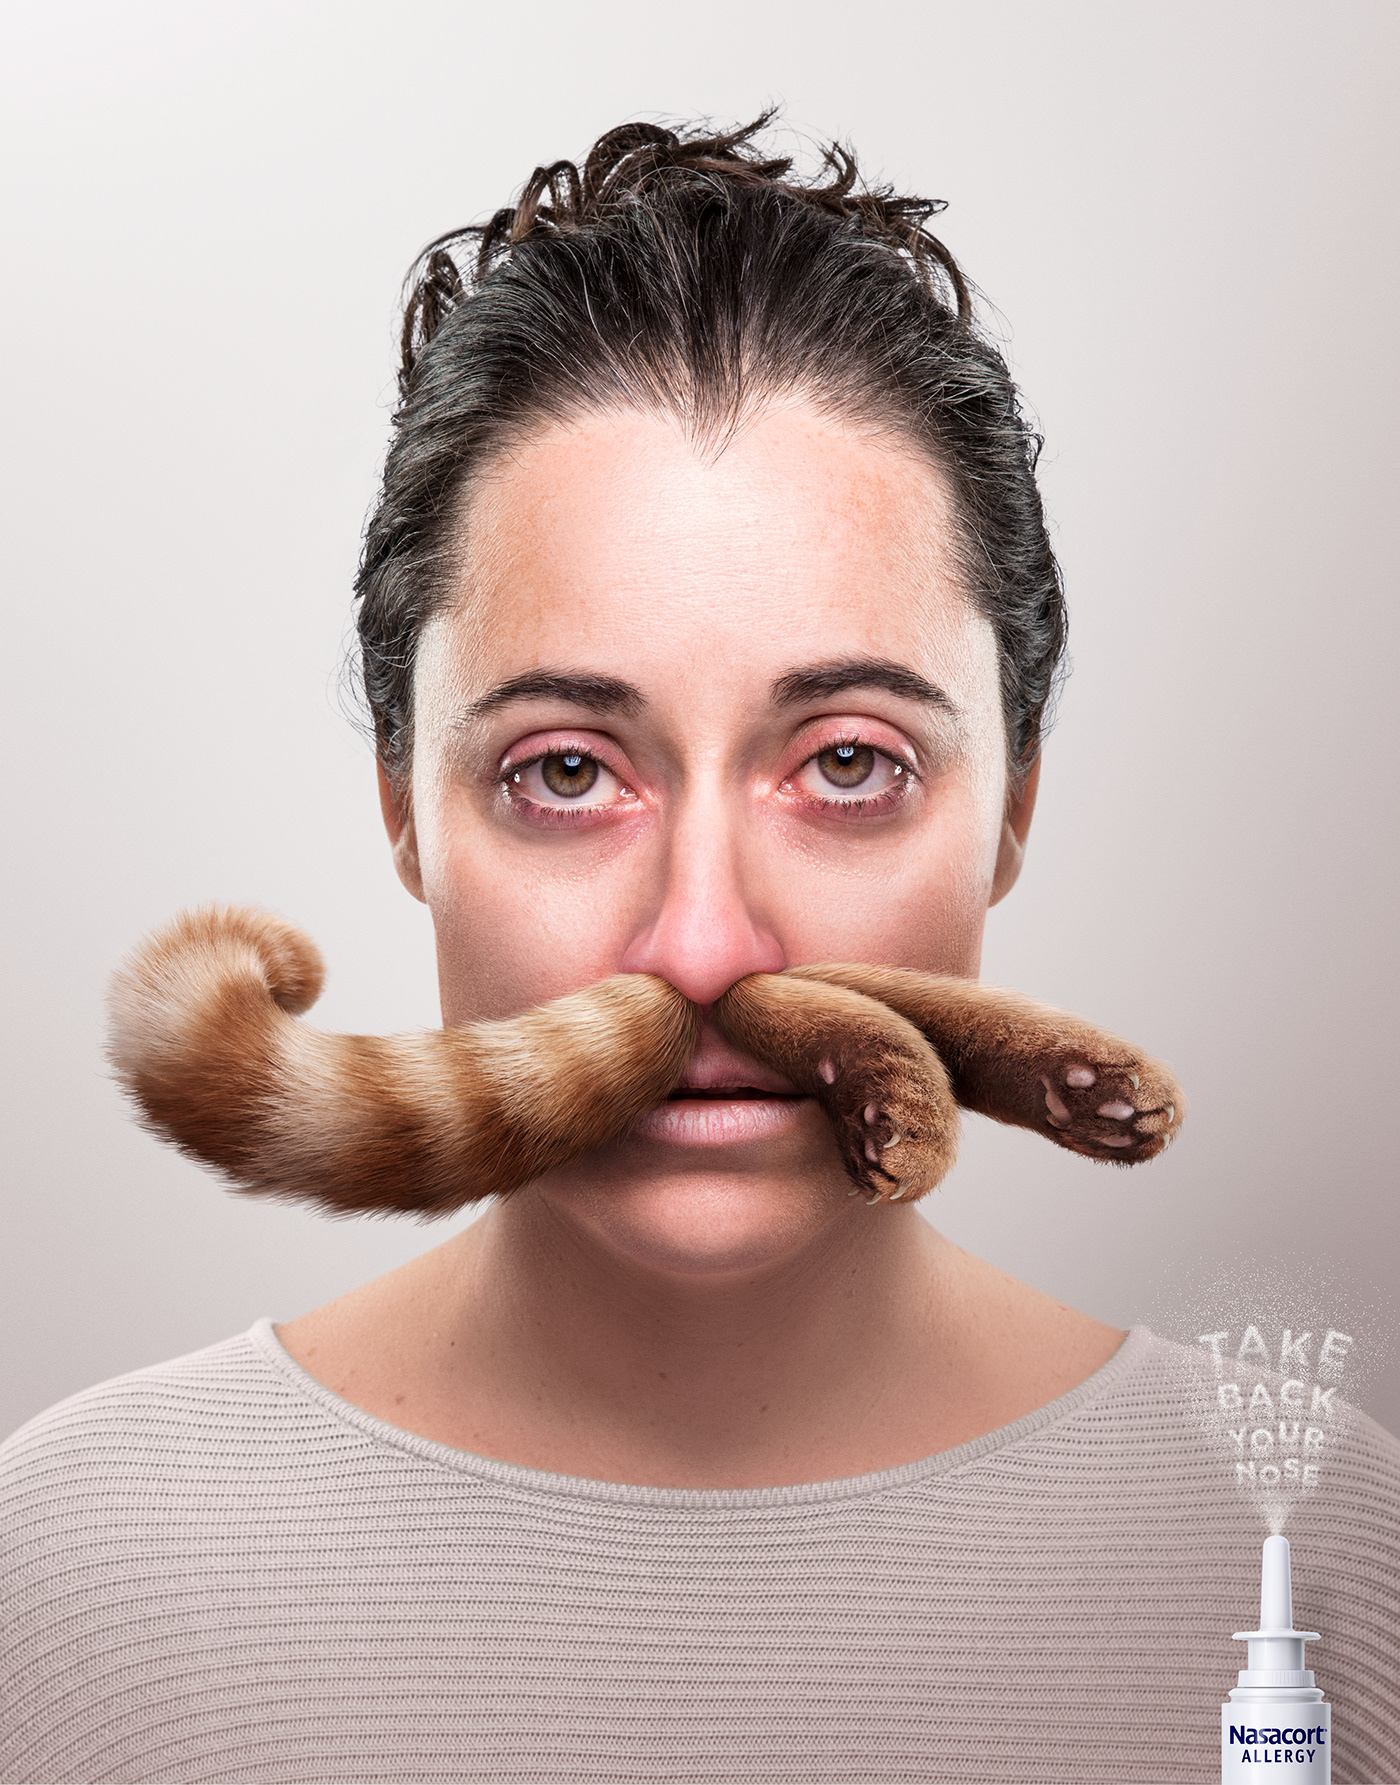 allergy portrait studio retouch ad Advertising  sneezing nose Ragweed Cat